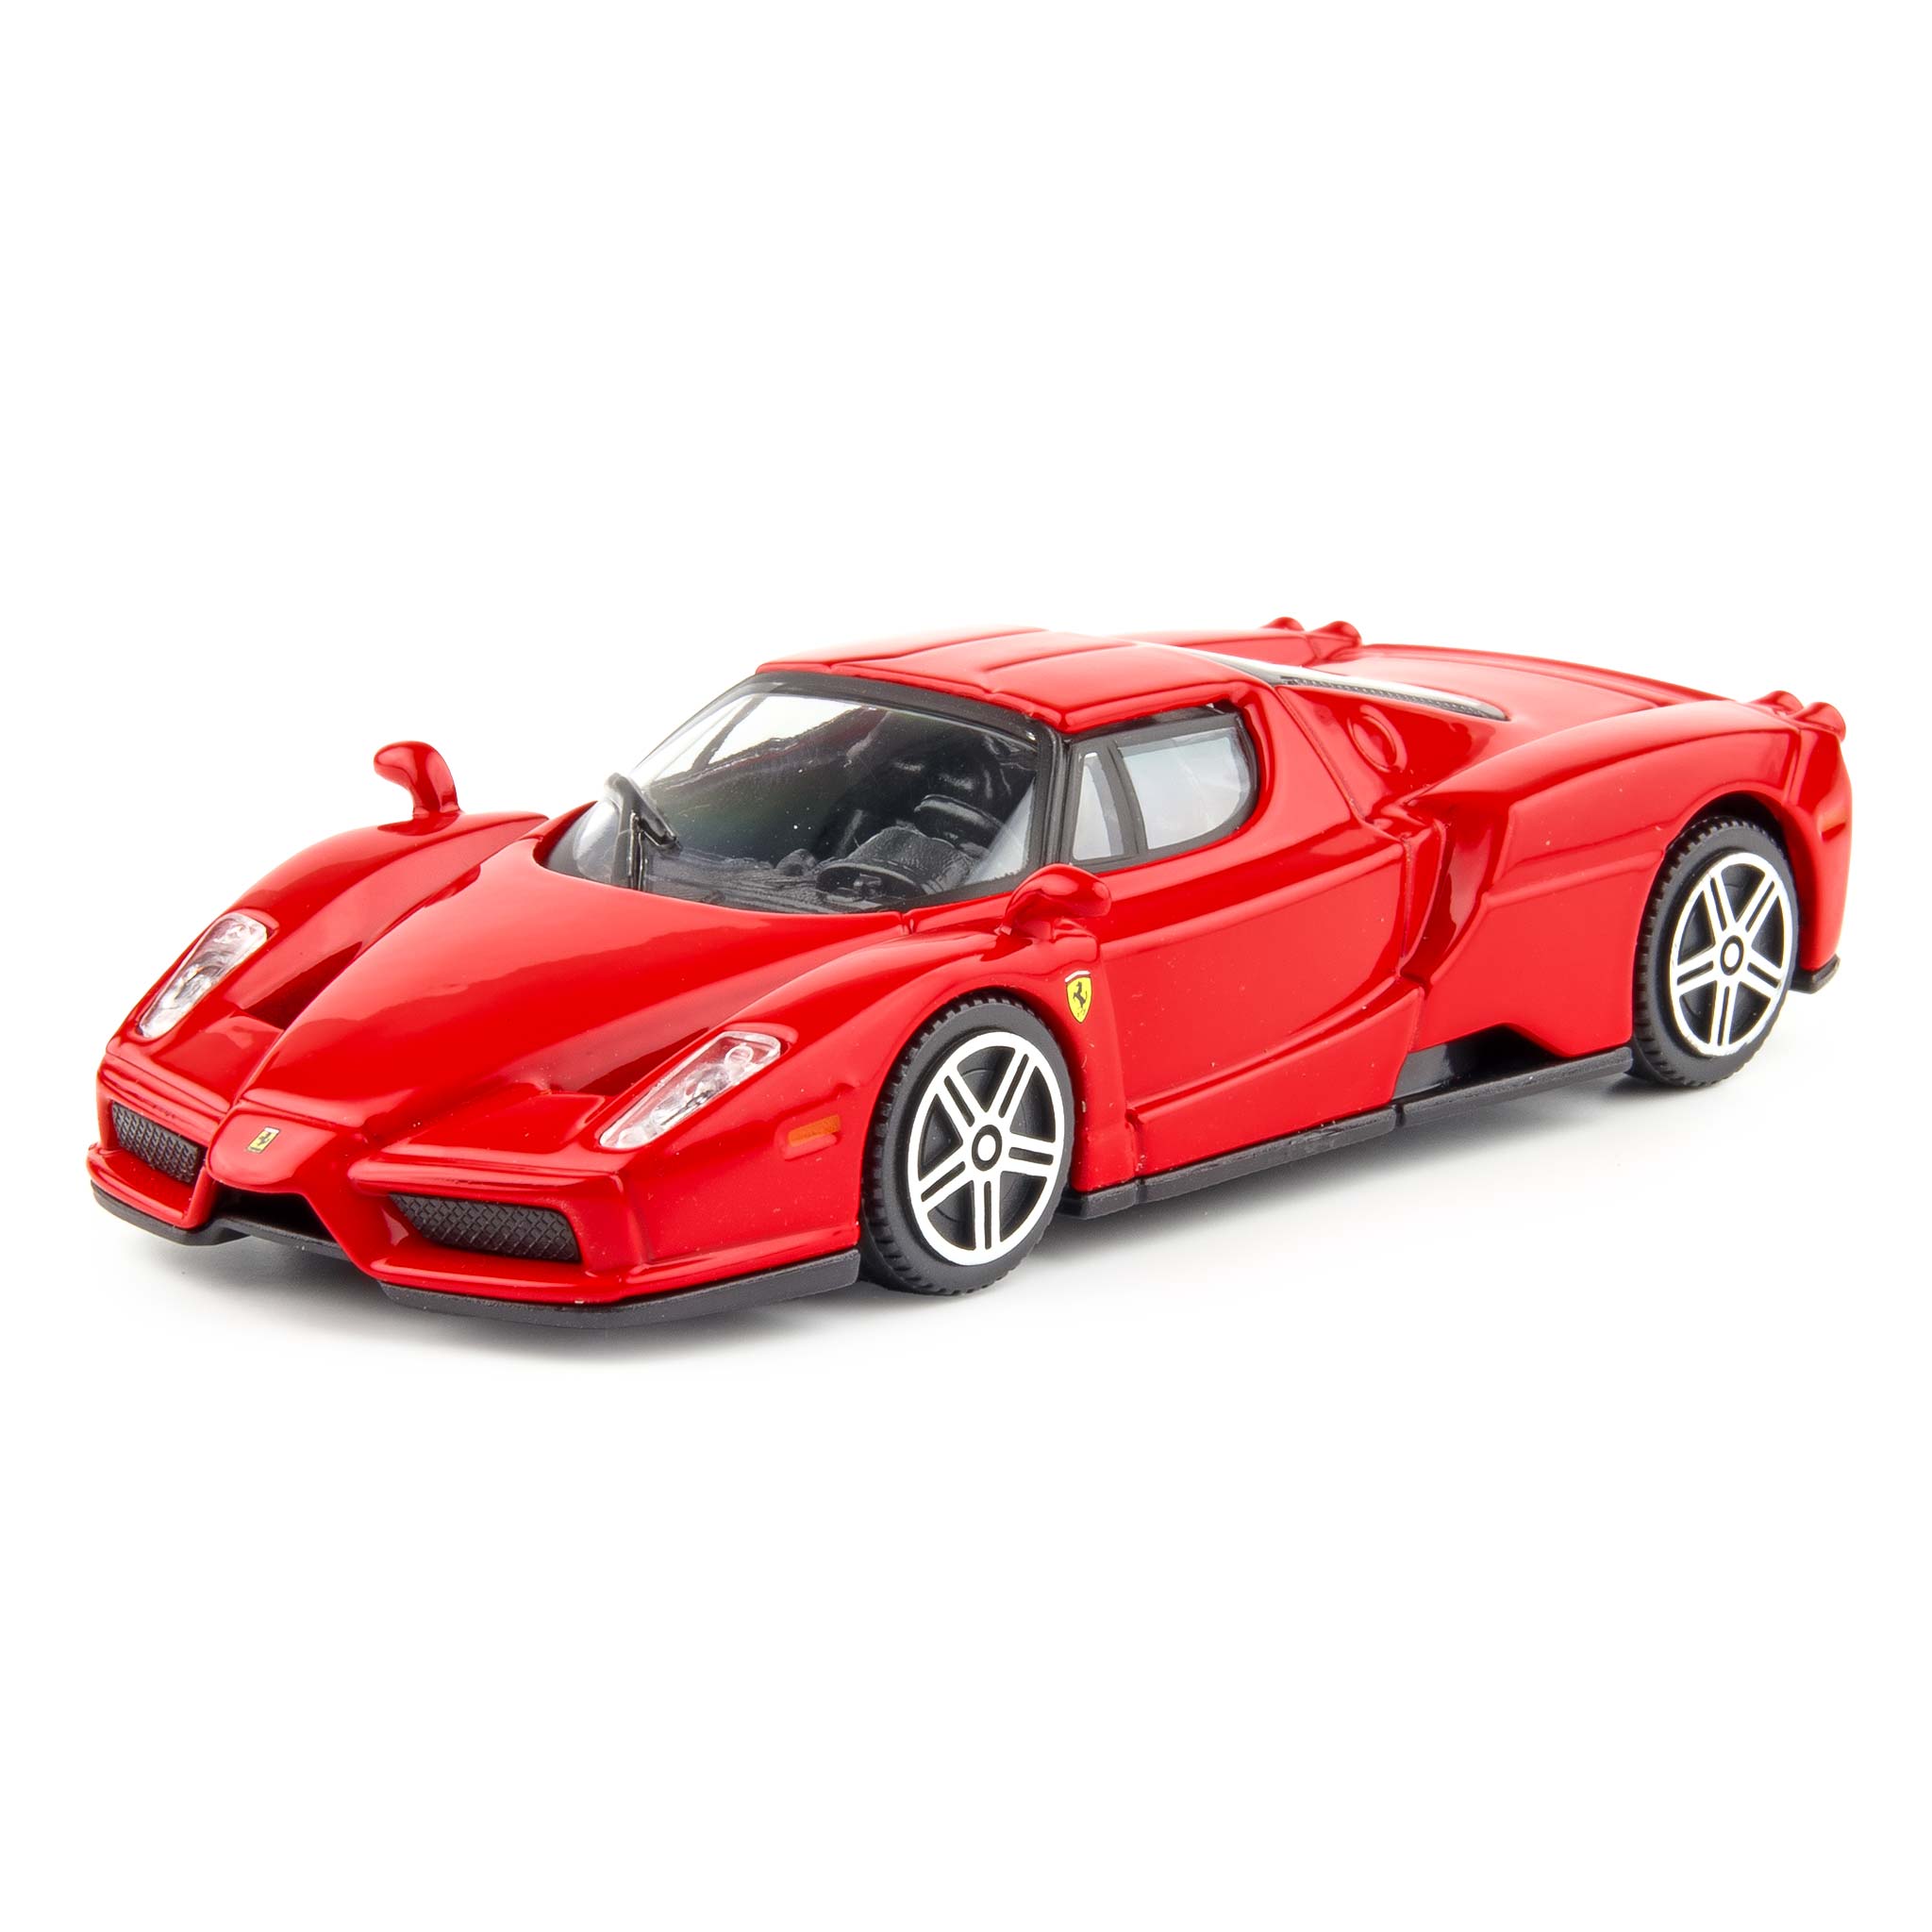 Ferrari Enzo red - 1:43 Scale